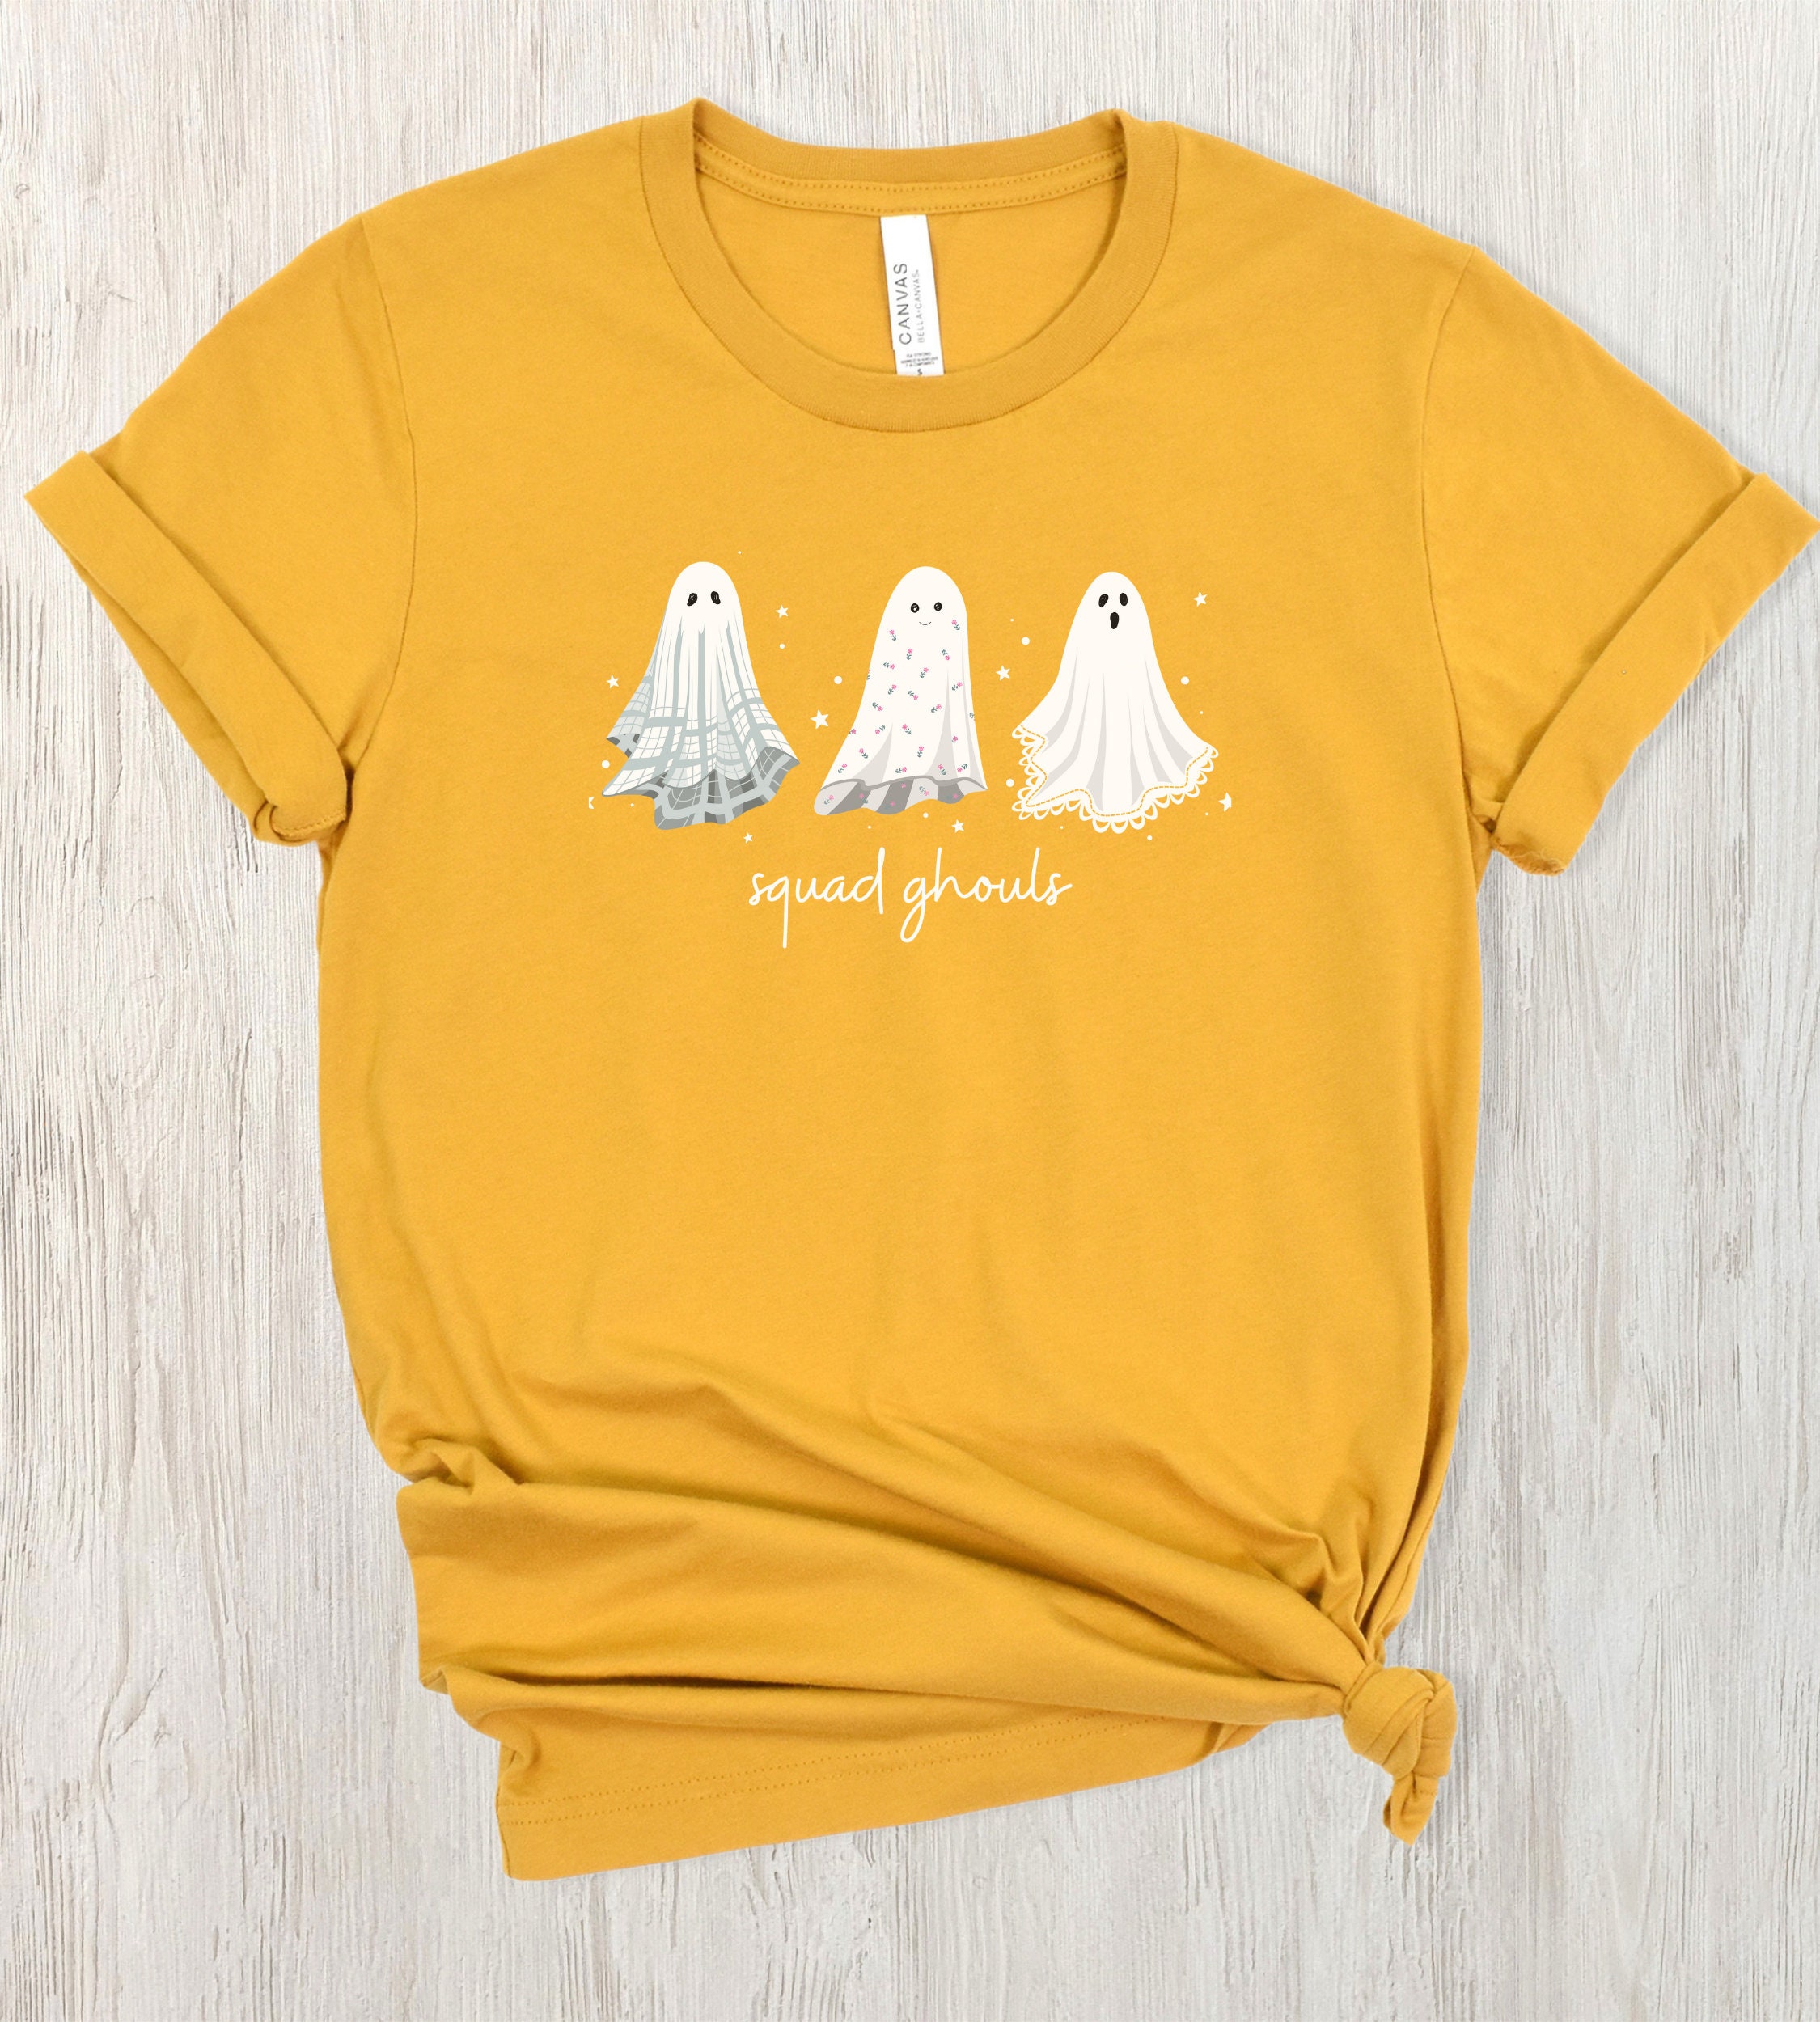 Discover Cute Ghost Halloween Shirt Squad Ghouls, squad goals shirt, fall season tee, unisex halloween T shirt, Funny ghosts, Group Halloween Shirts